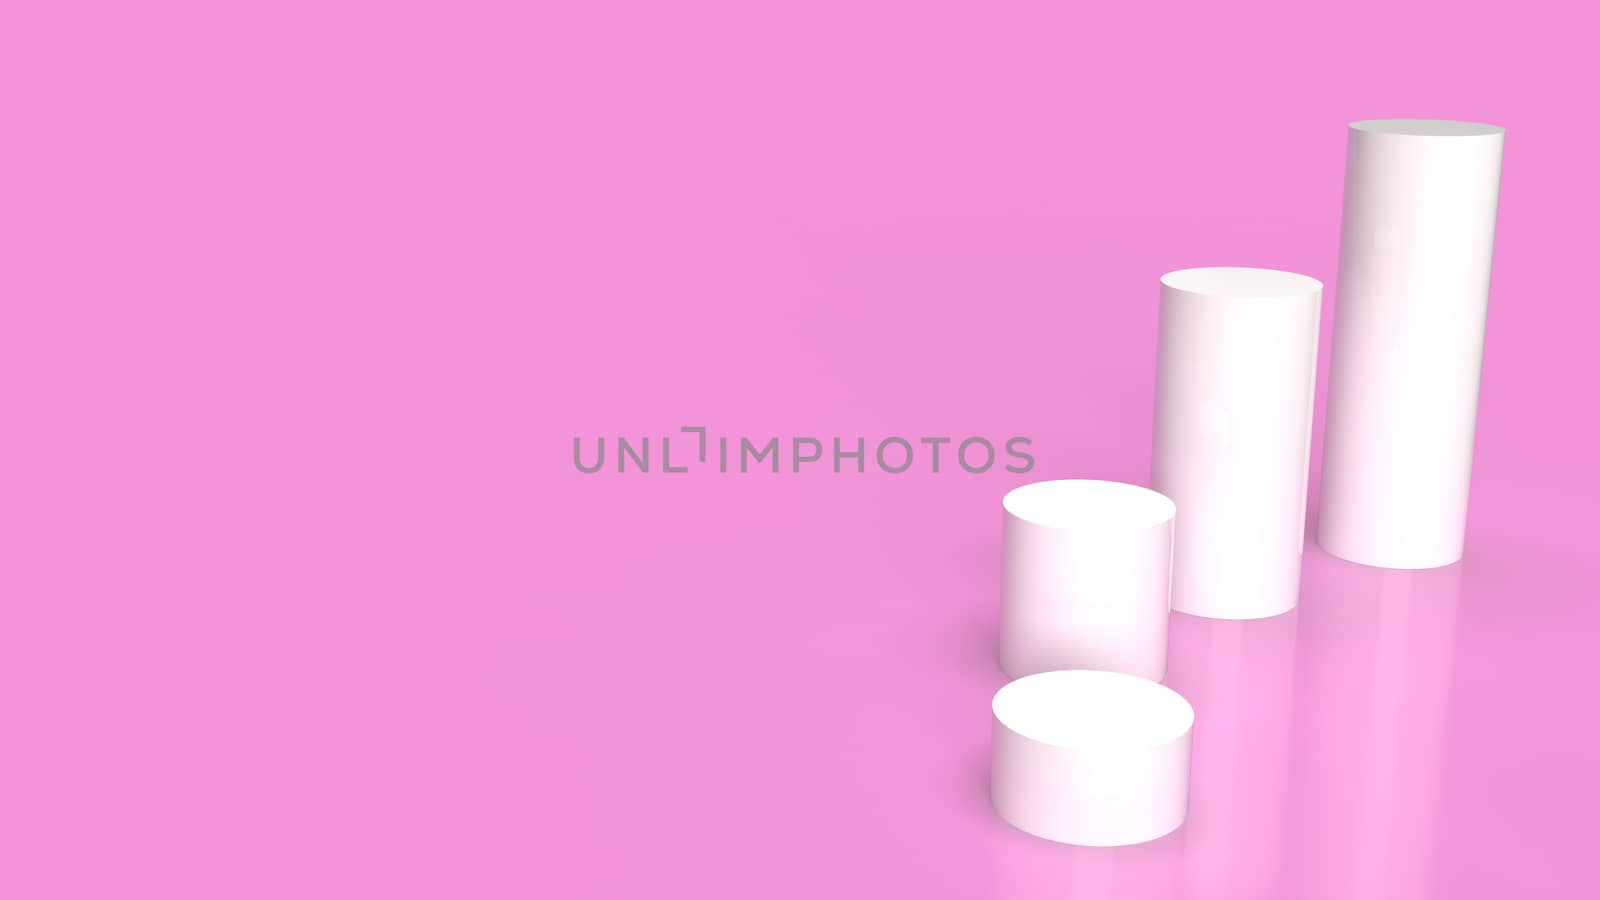 The white Podium platform on pink background 3d rendering.
